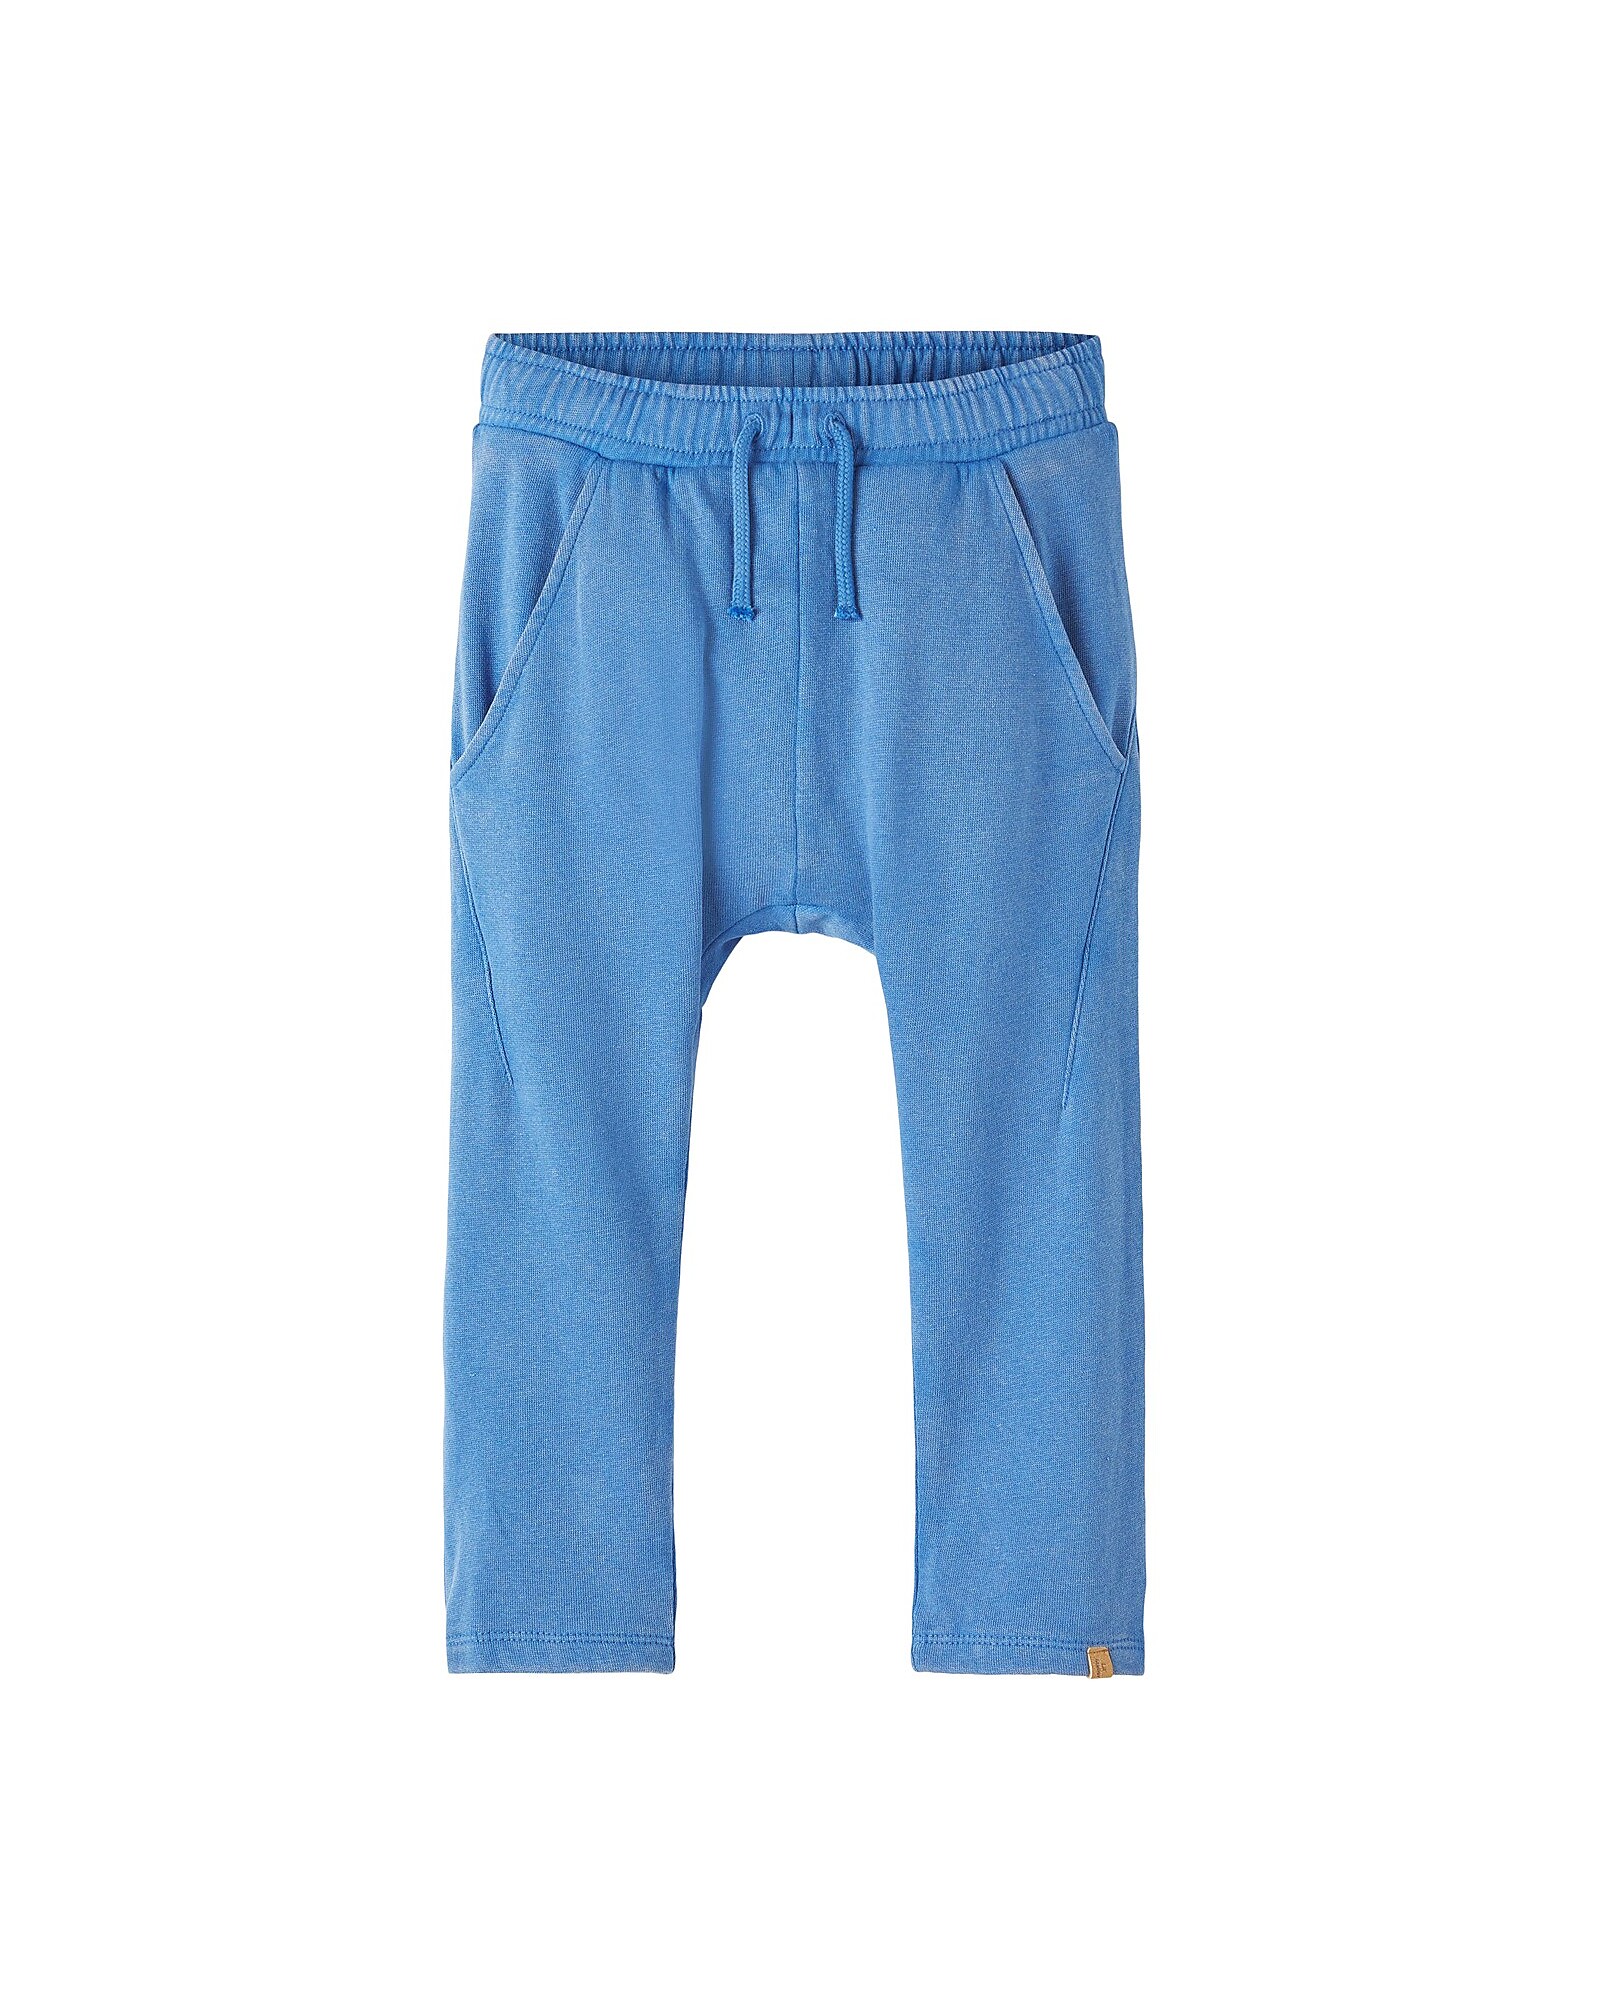 Pantaloni Joggers Blu Navy in Cotone Organico di Kite Clothing